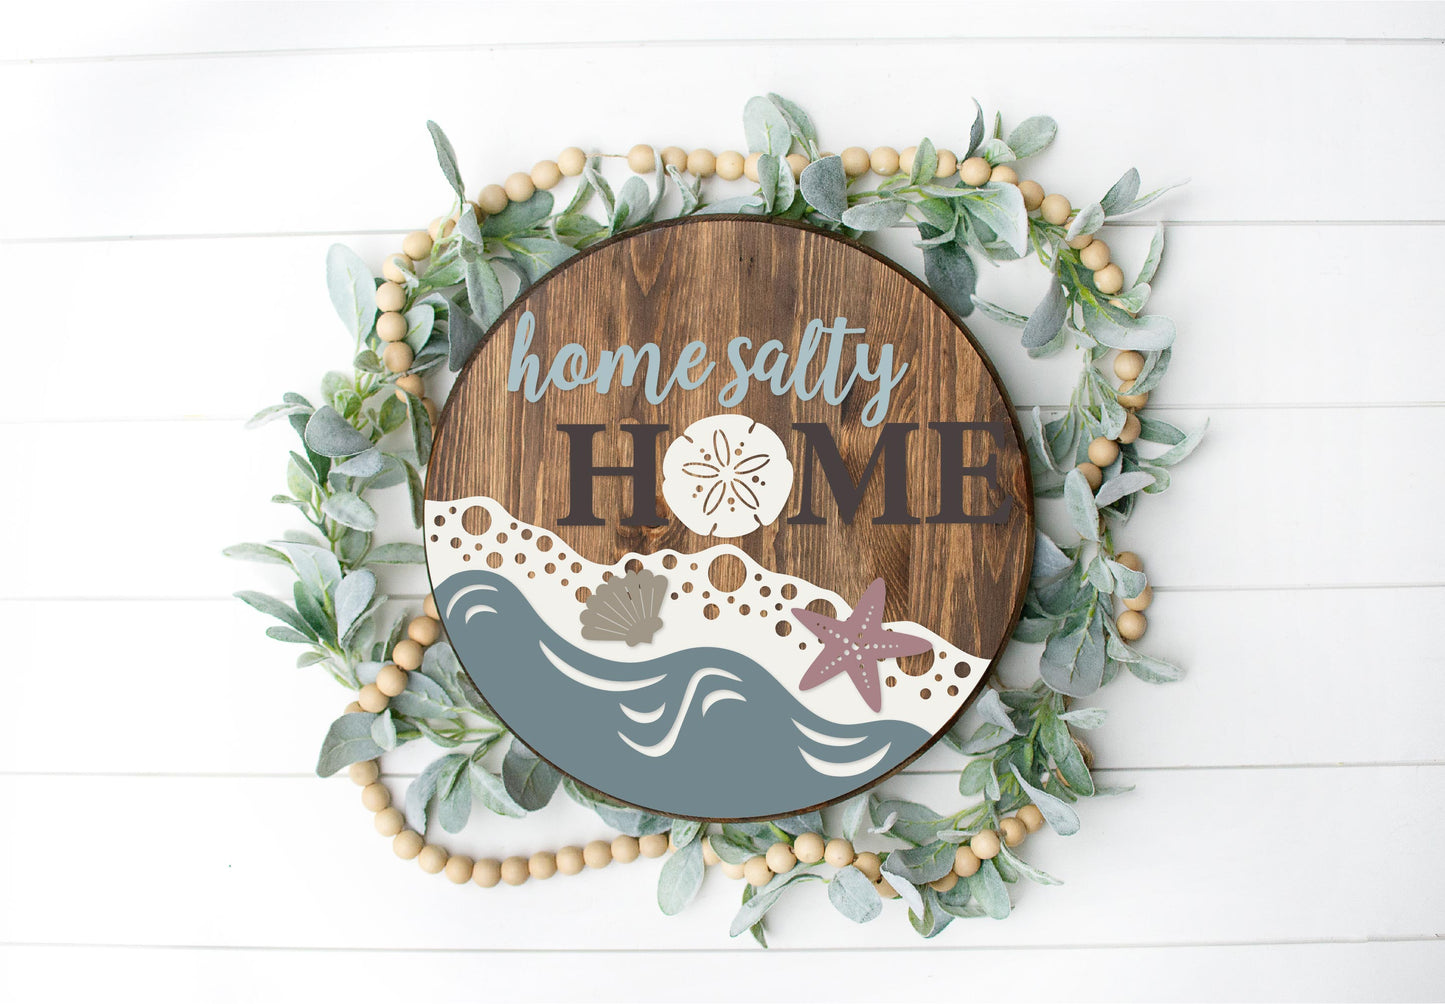 Home salty home beach DIY sign